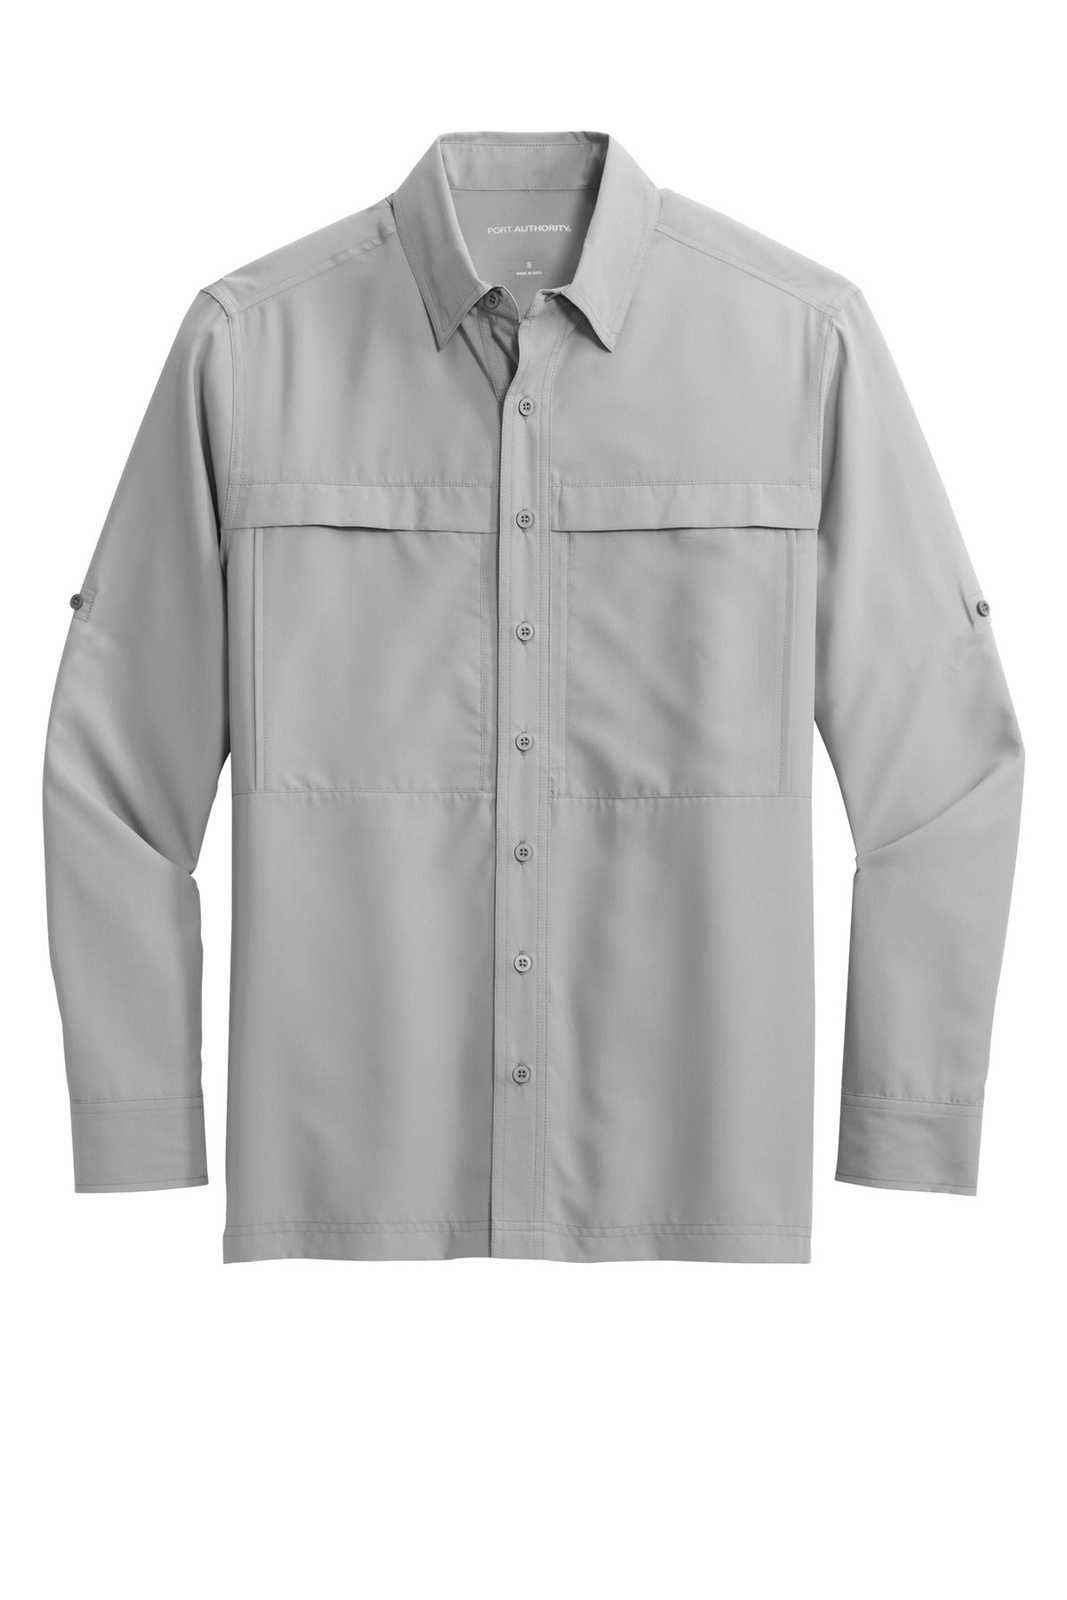 Port Authority W960 Long Sleeve UV Daybreak Shirt - Gusty Grey - HIT a Double - 1